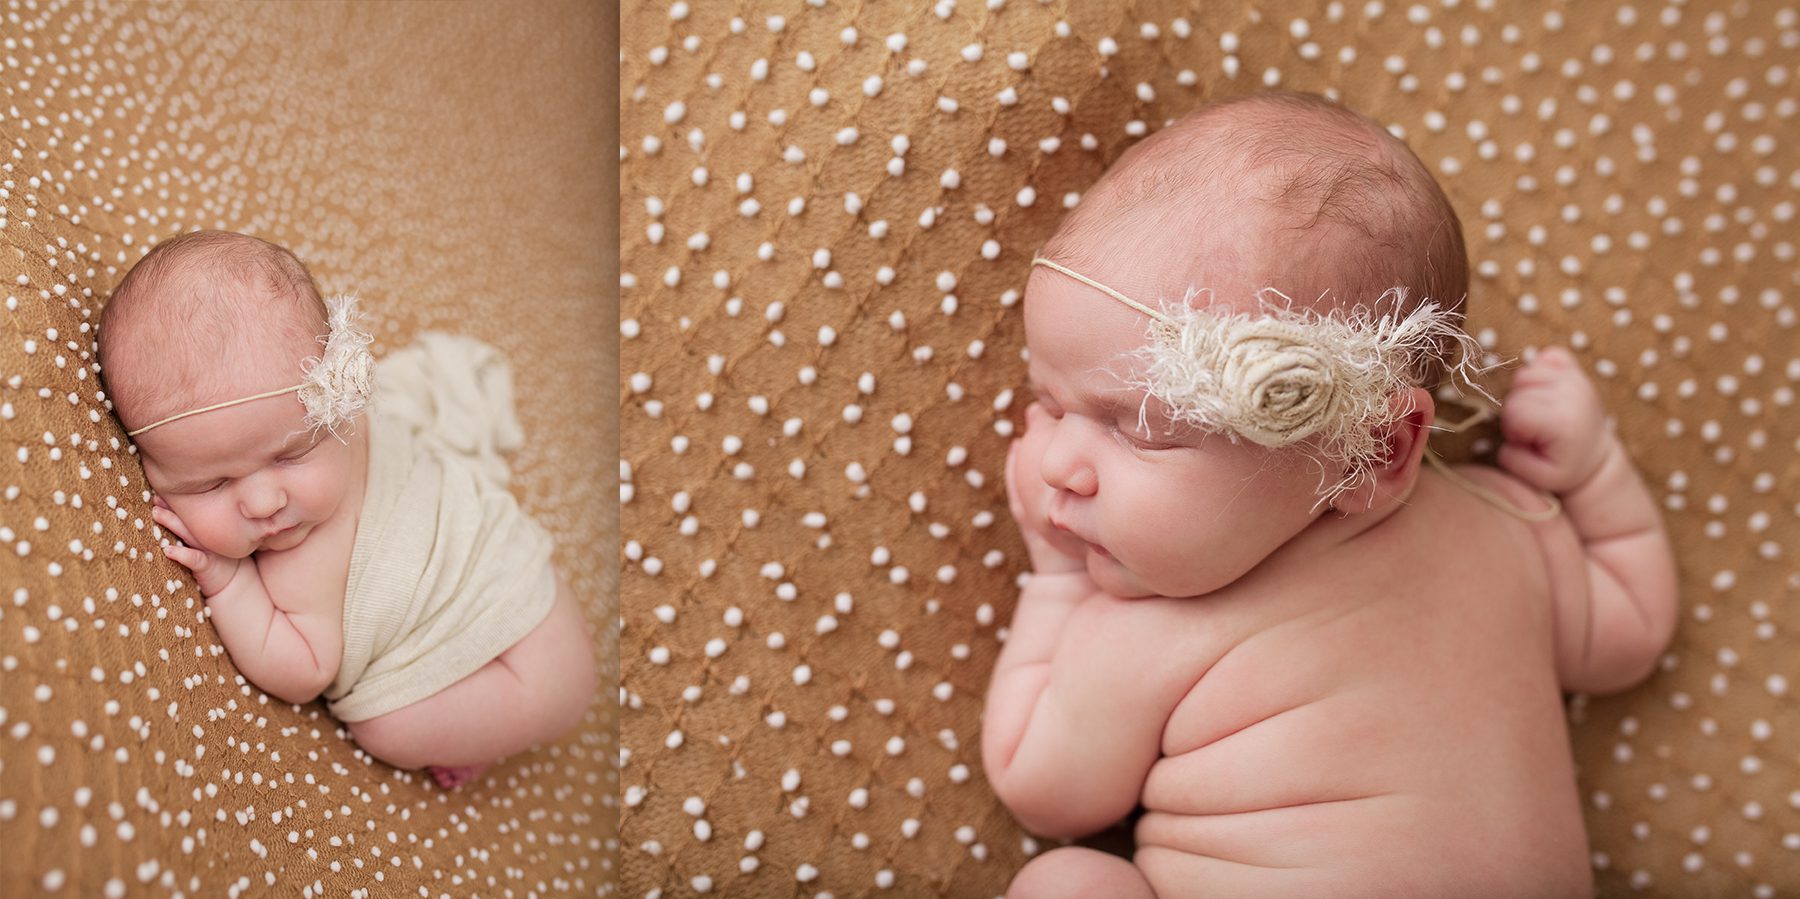 edmonton newborn photographer - posed on her tummy